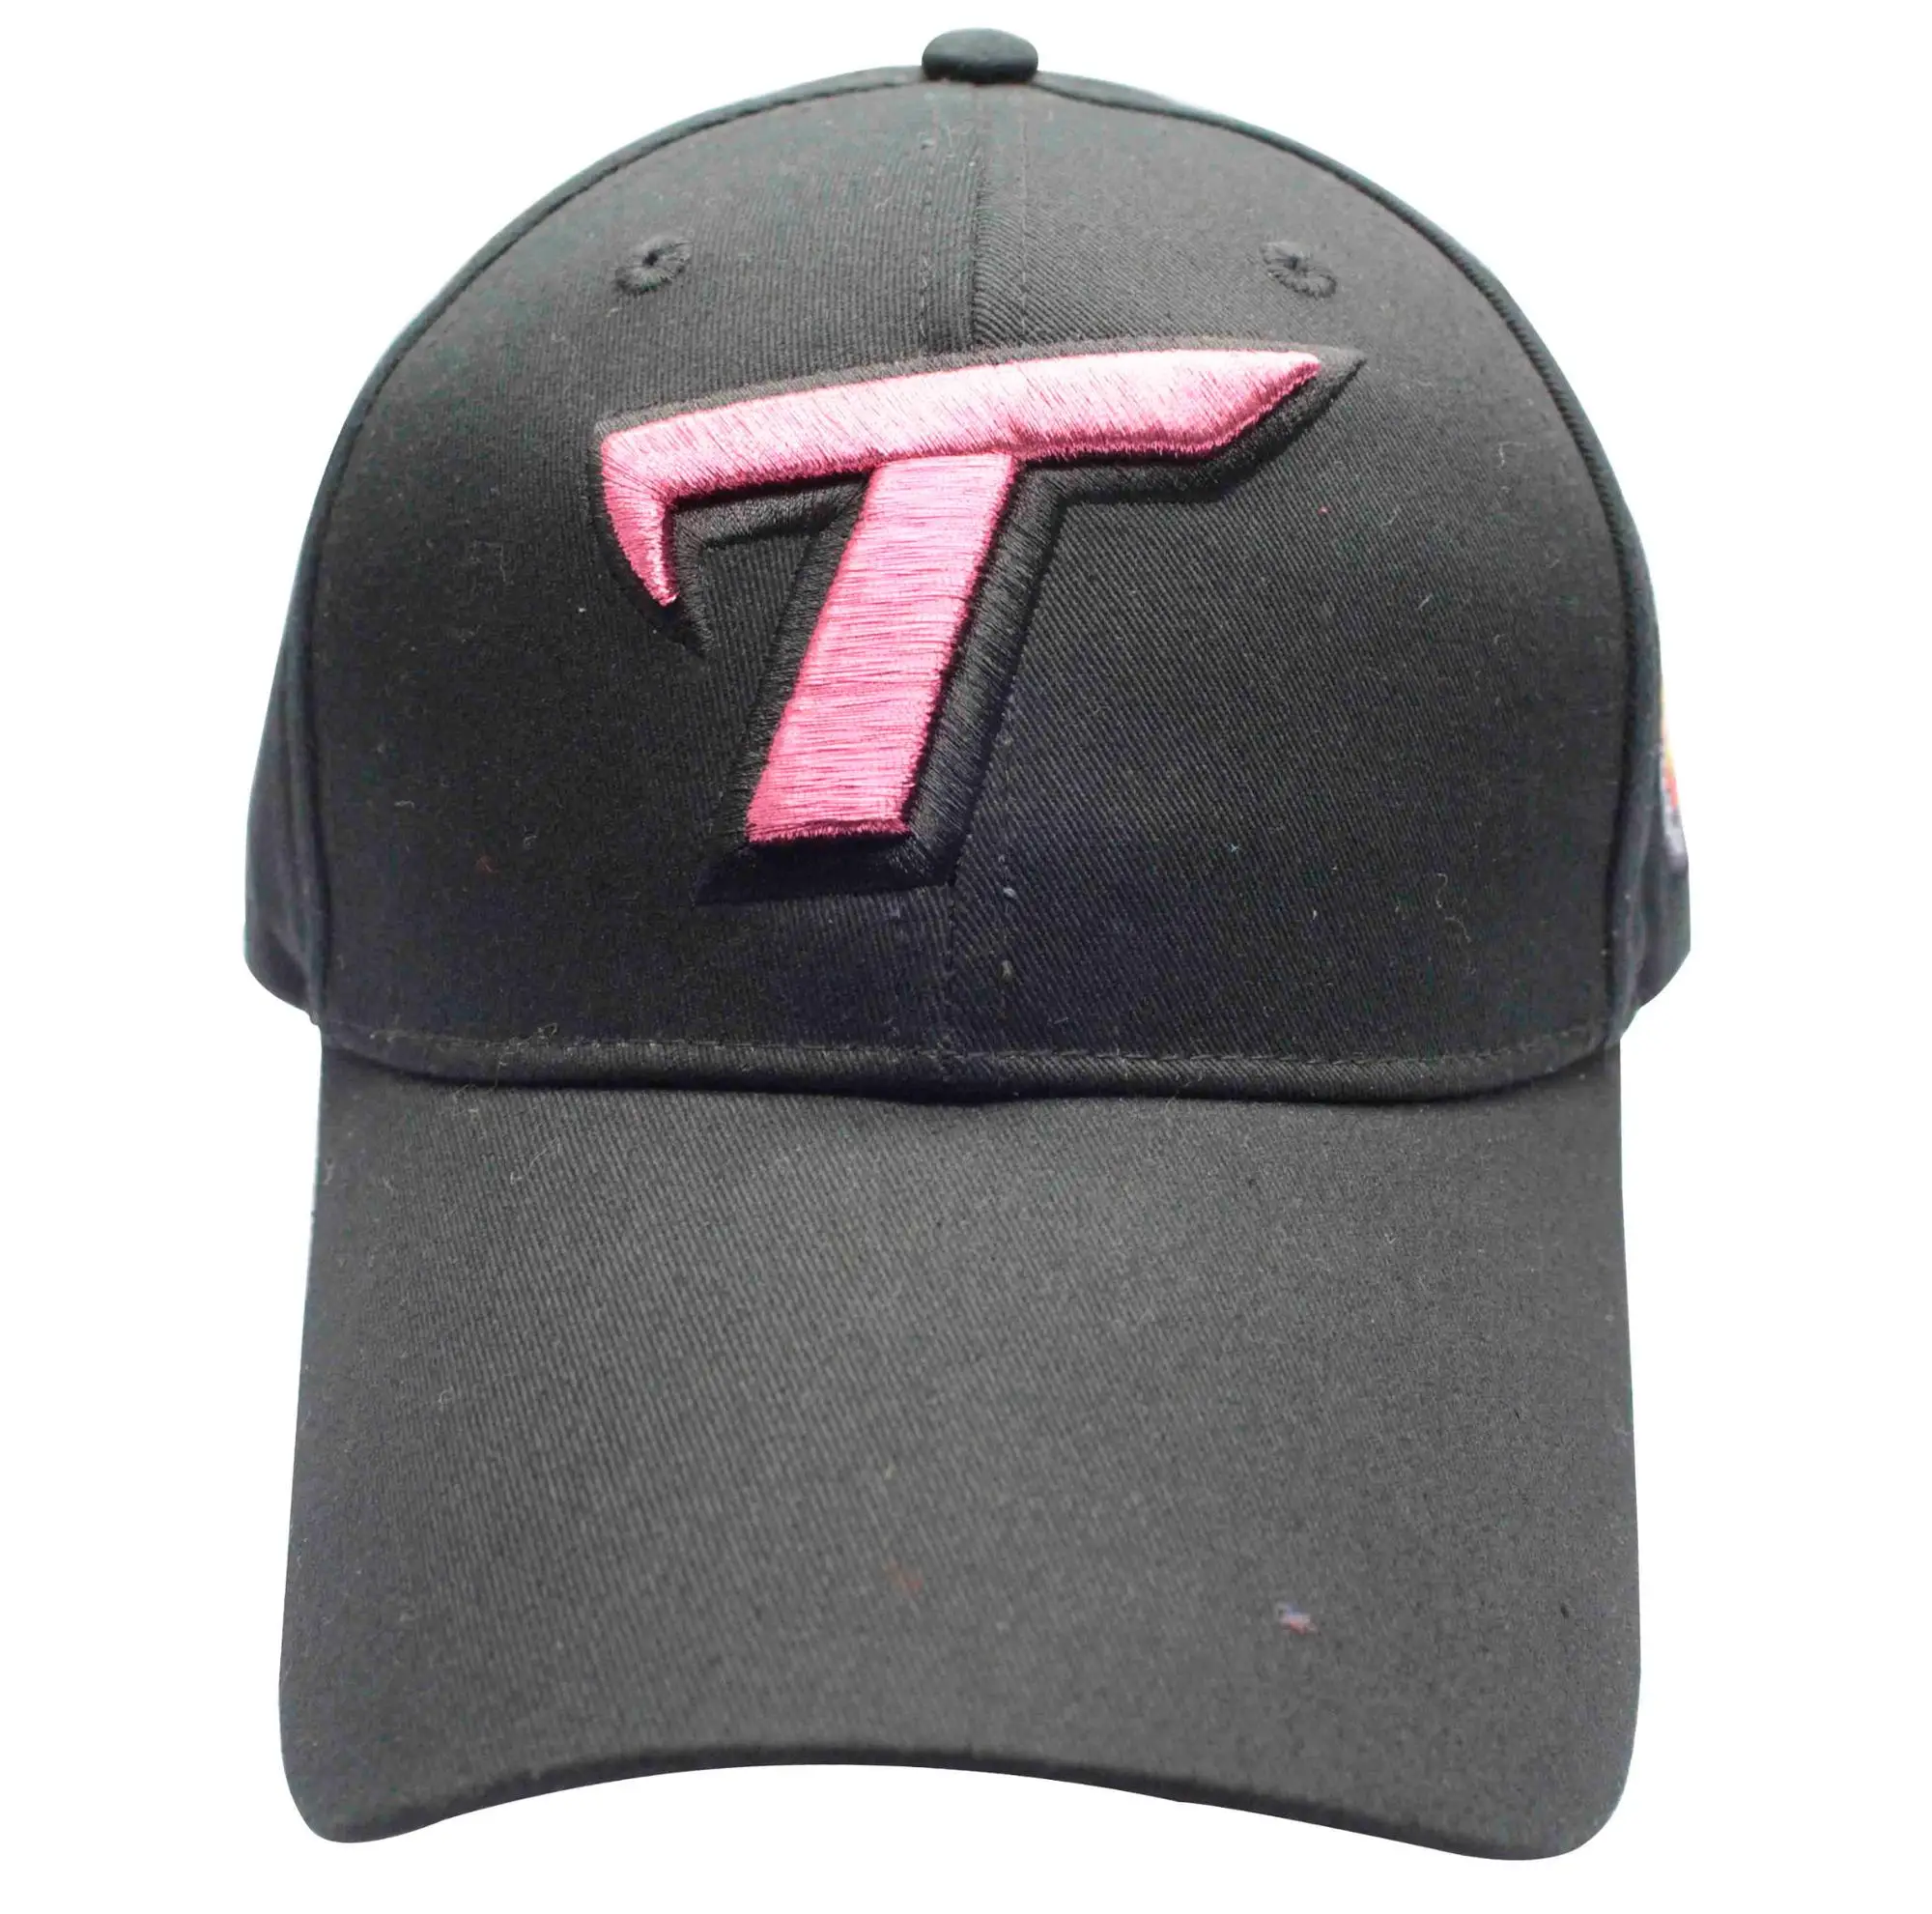 Name Brand Baseball Cap Products Hats Baseball Cap Black ...